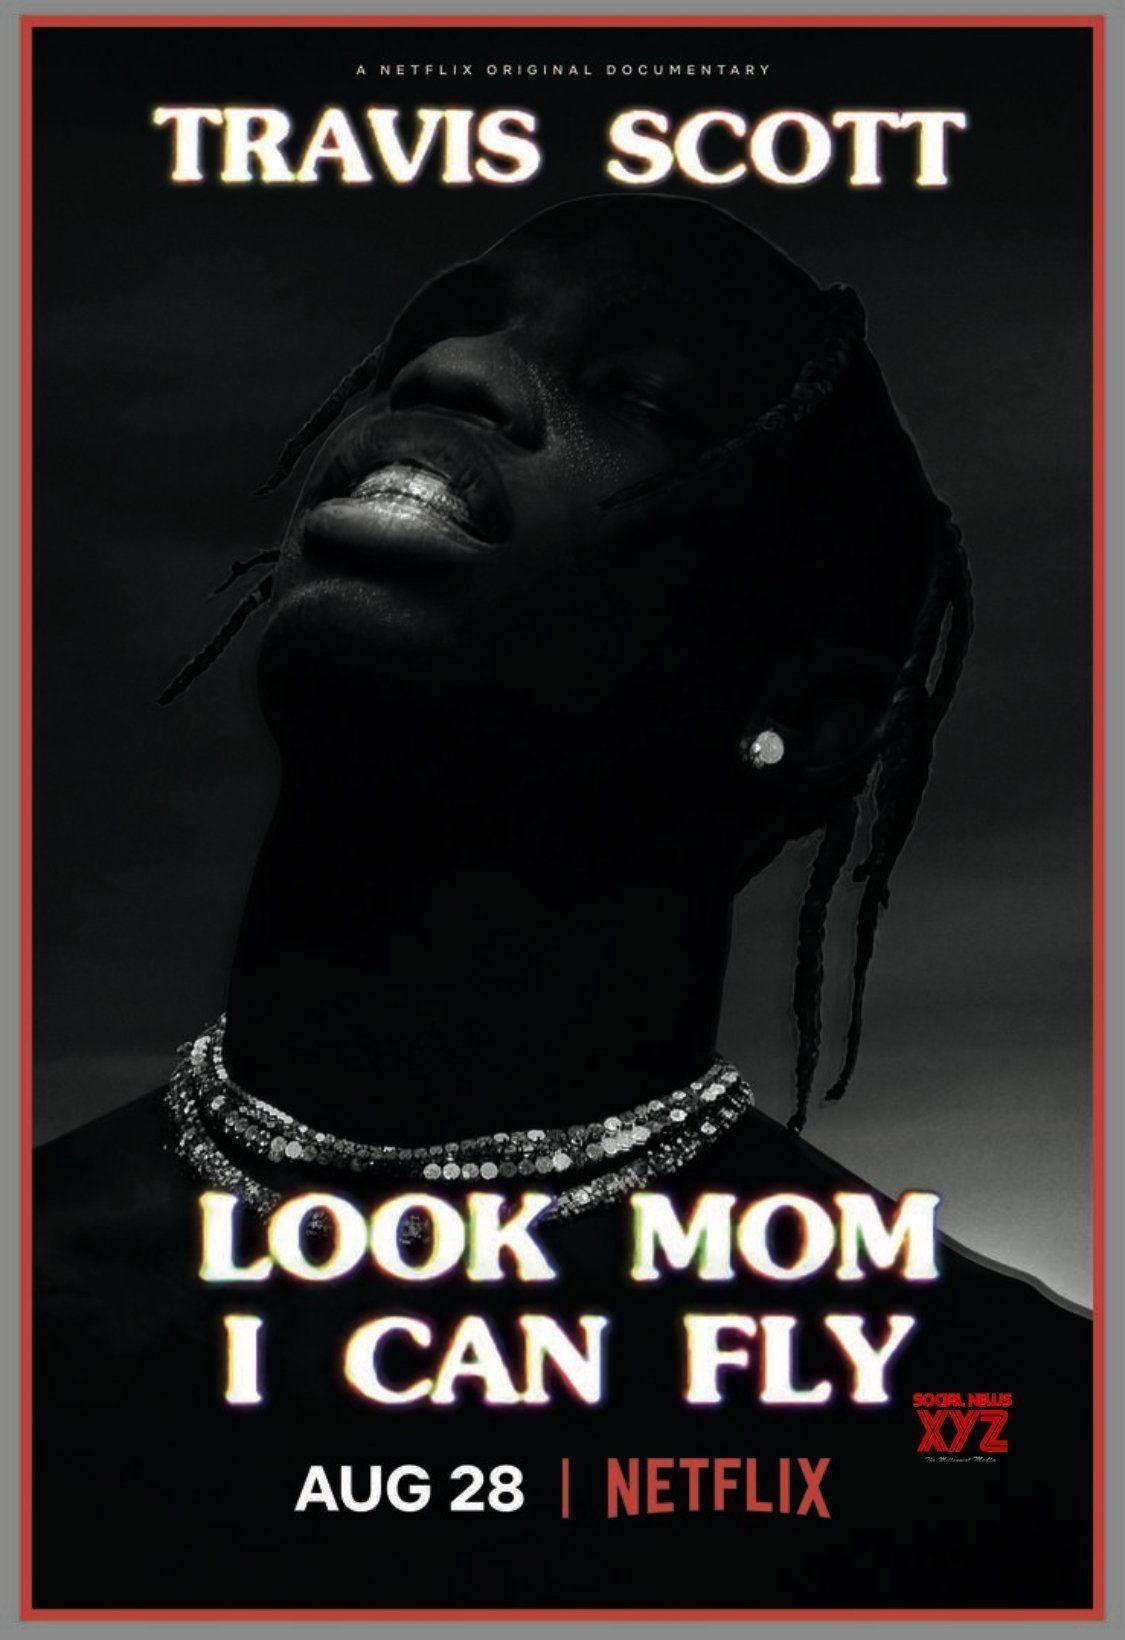 Look mom I can Fly” Wallpaper  Travis scott wallpapers, Travis